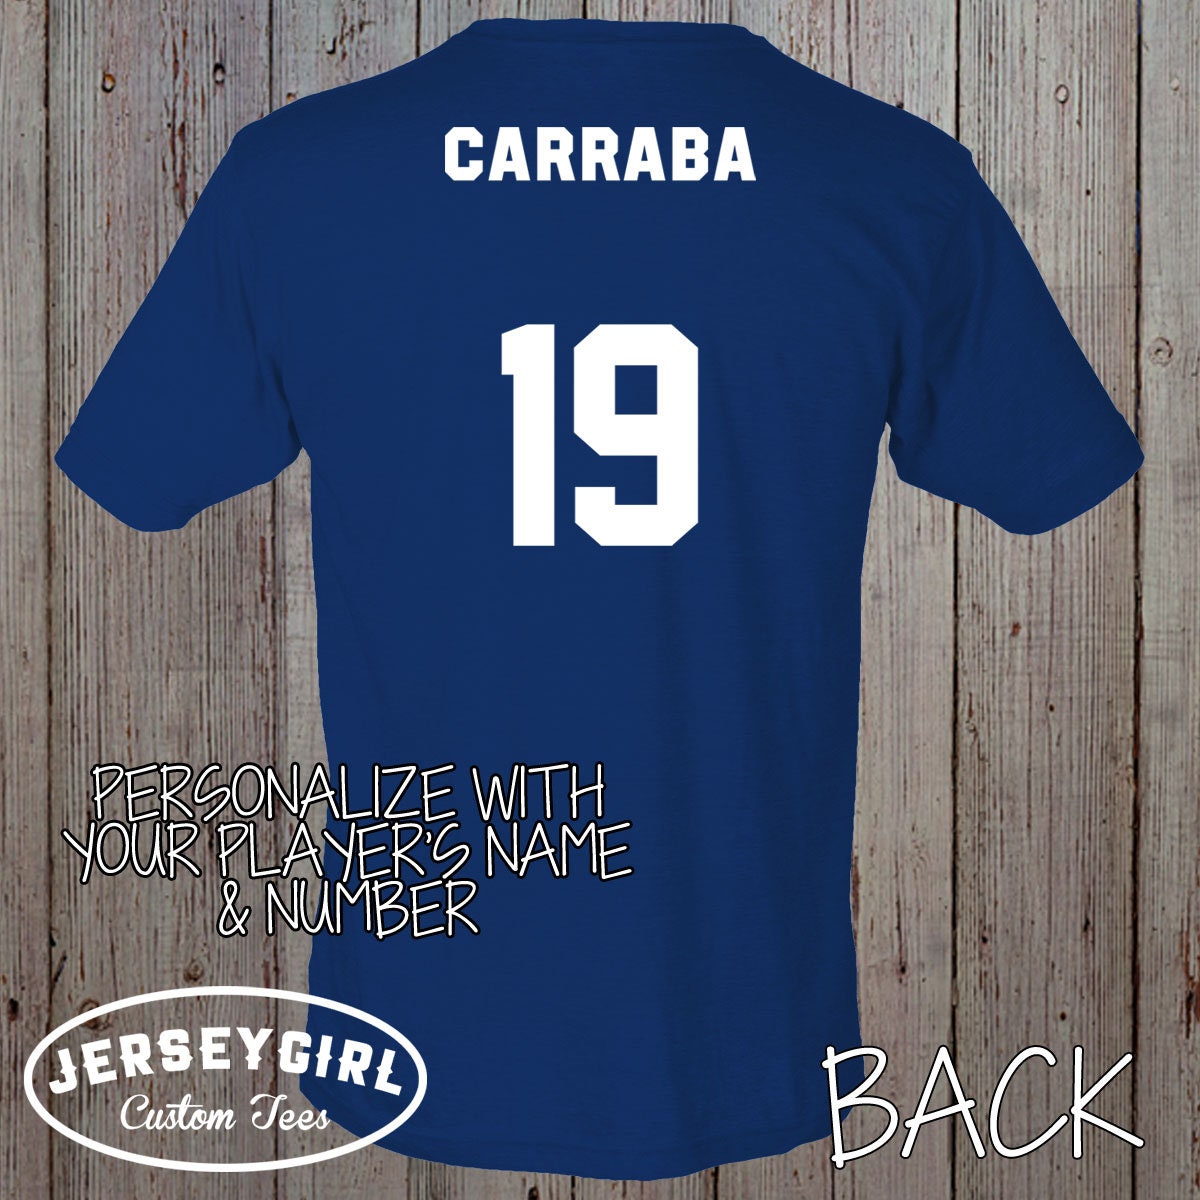 Let Pablo Pitch Name + Number Shirt - MLBPA Licensed - BreakingT